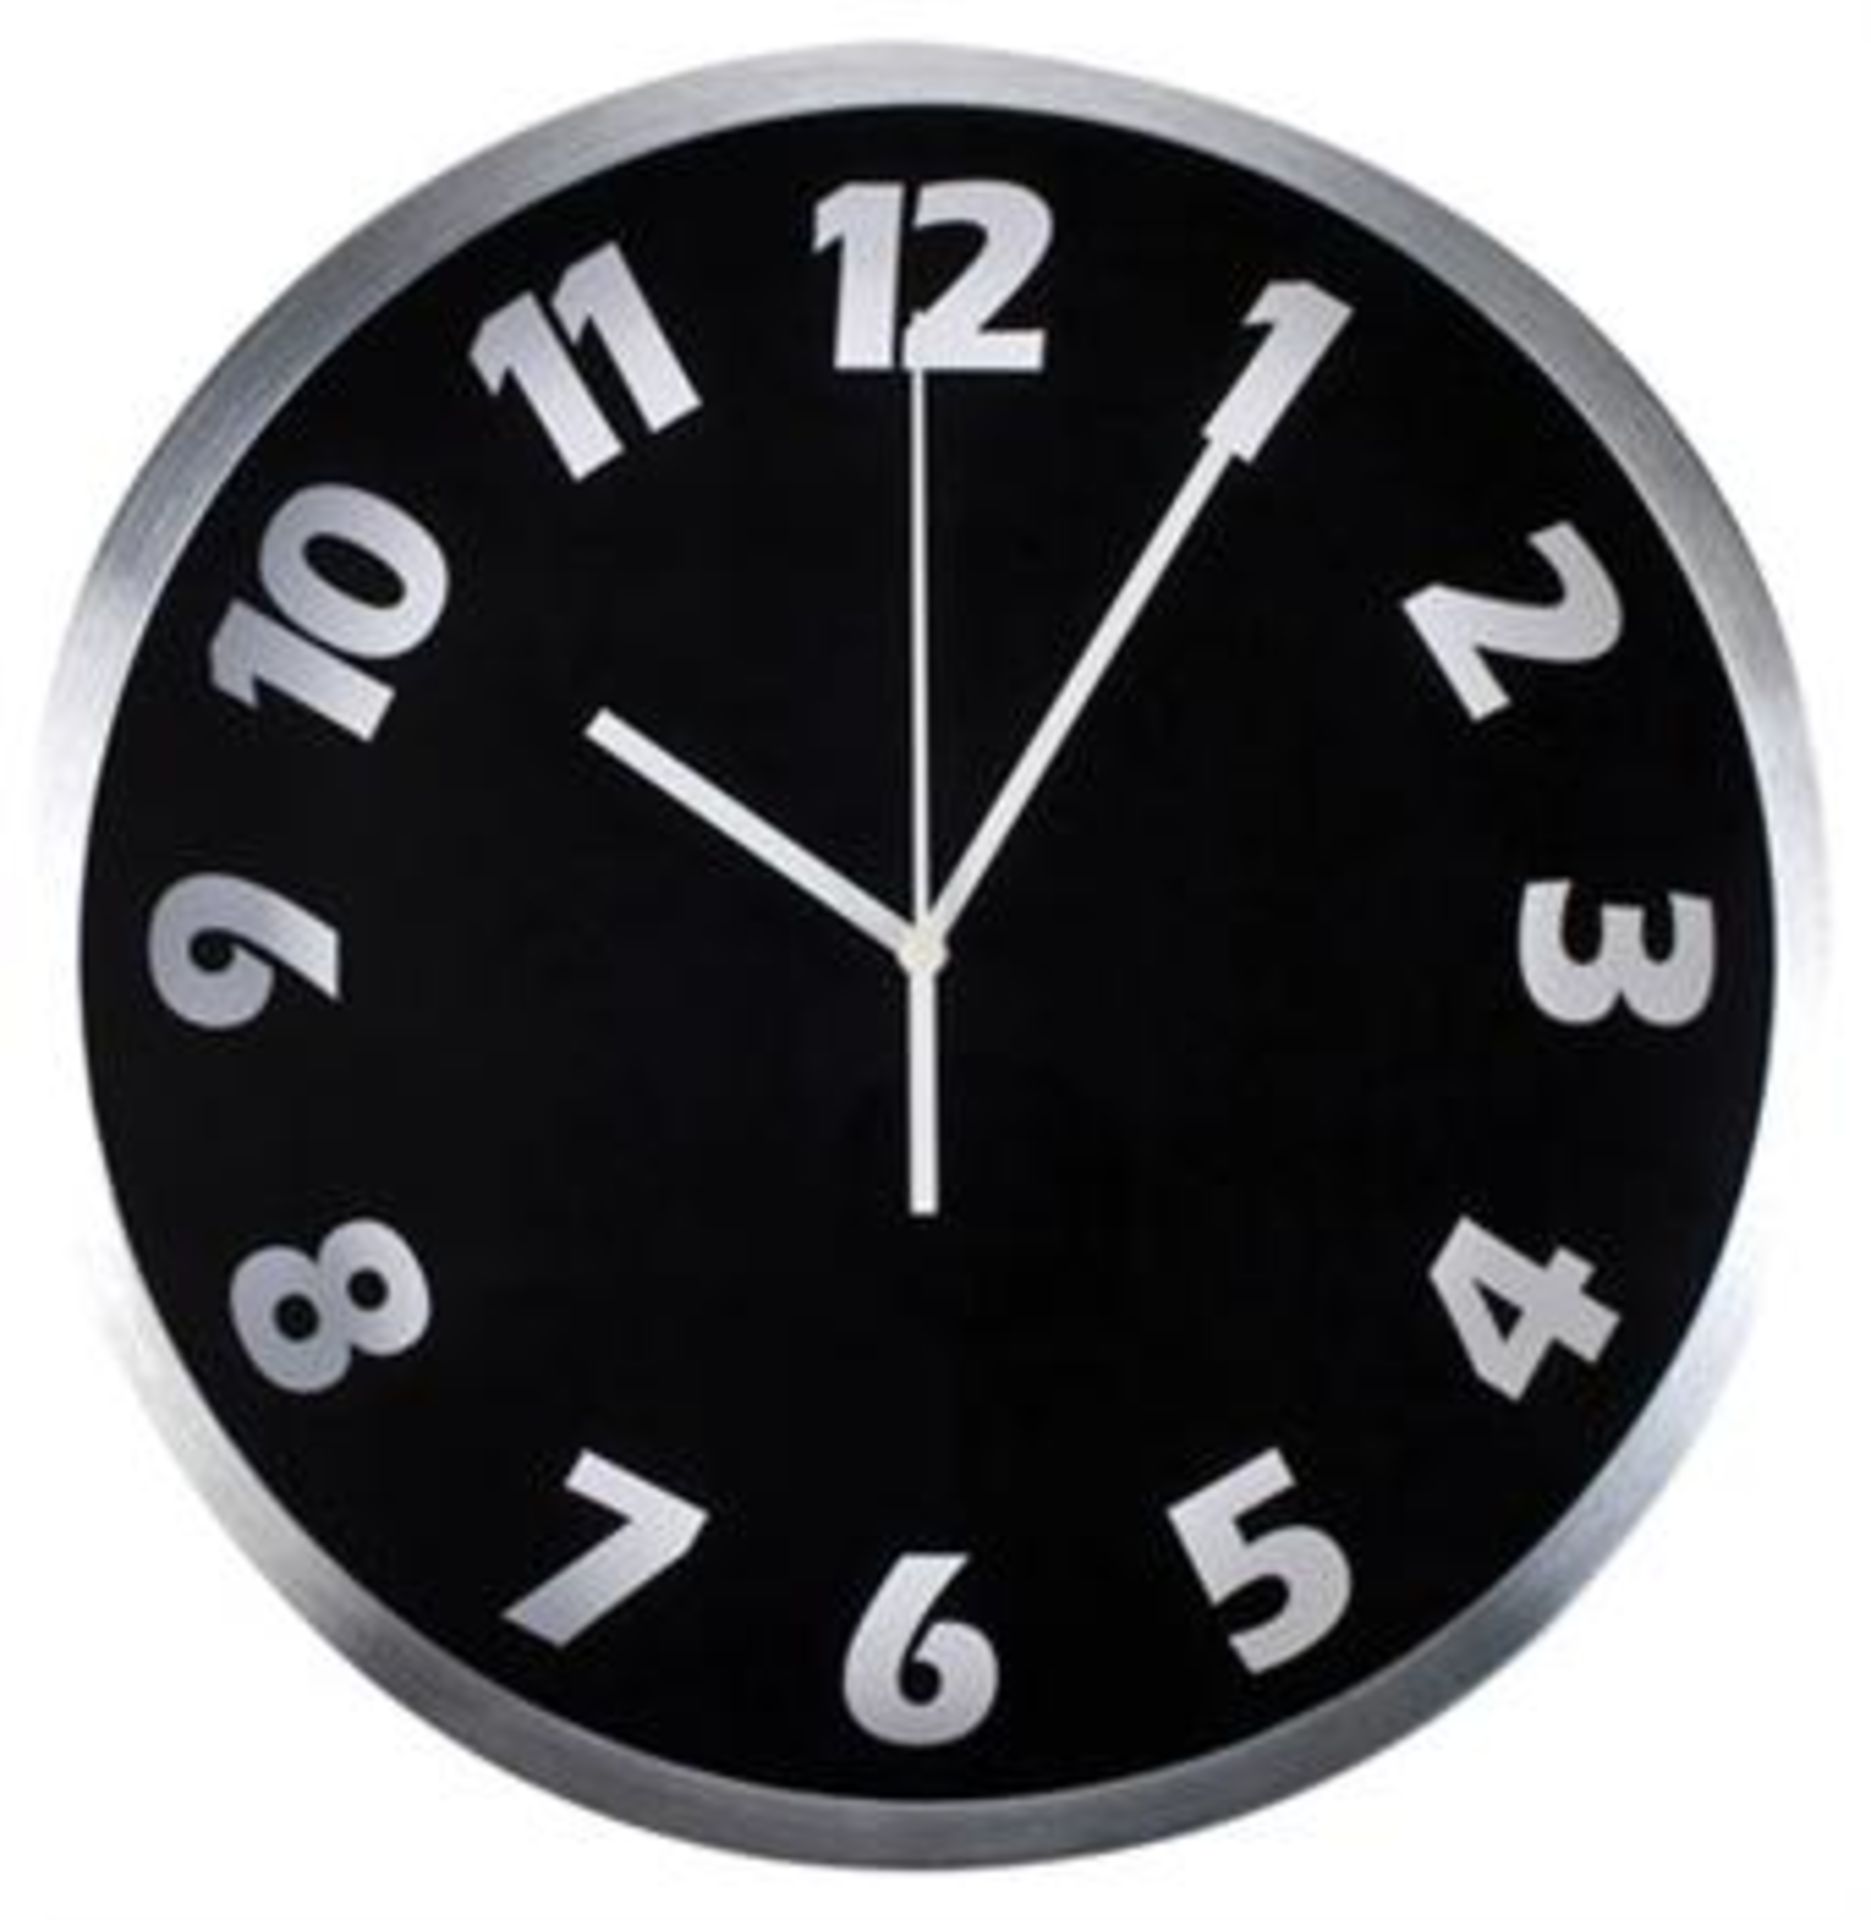 V *TRADE QTY* Brand New Brushed aluminium case wall clock 30cm diameter RRP 39.99 X 8 YOUR BID PRICE